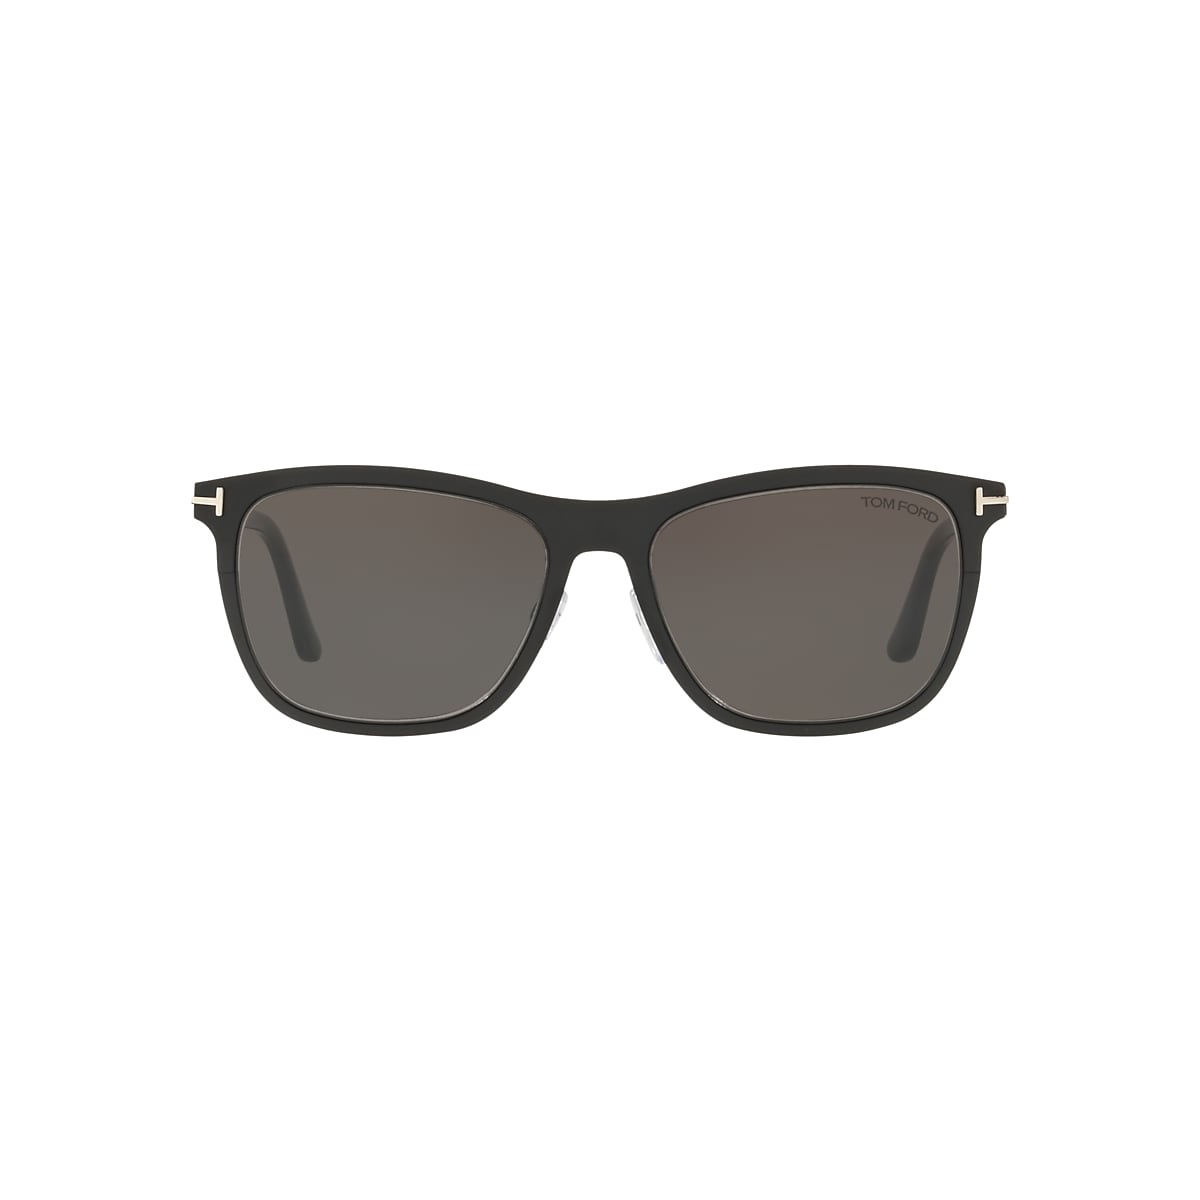 Tom Ford Alasdhair 55 Grey u0026 Black Sunglasses | Sunglass Hut United Kingdom